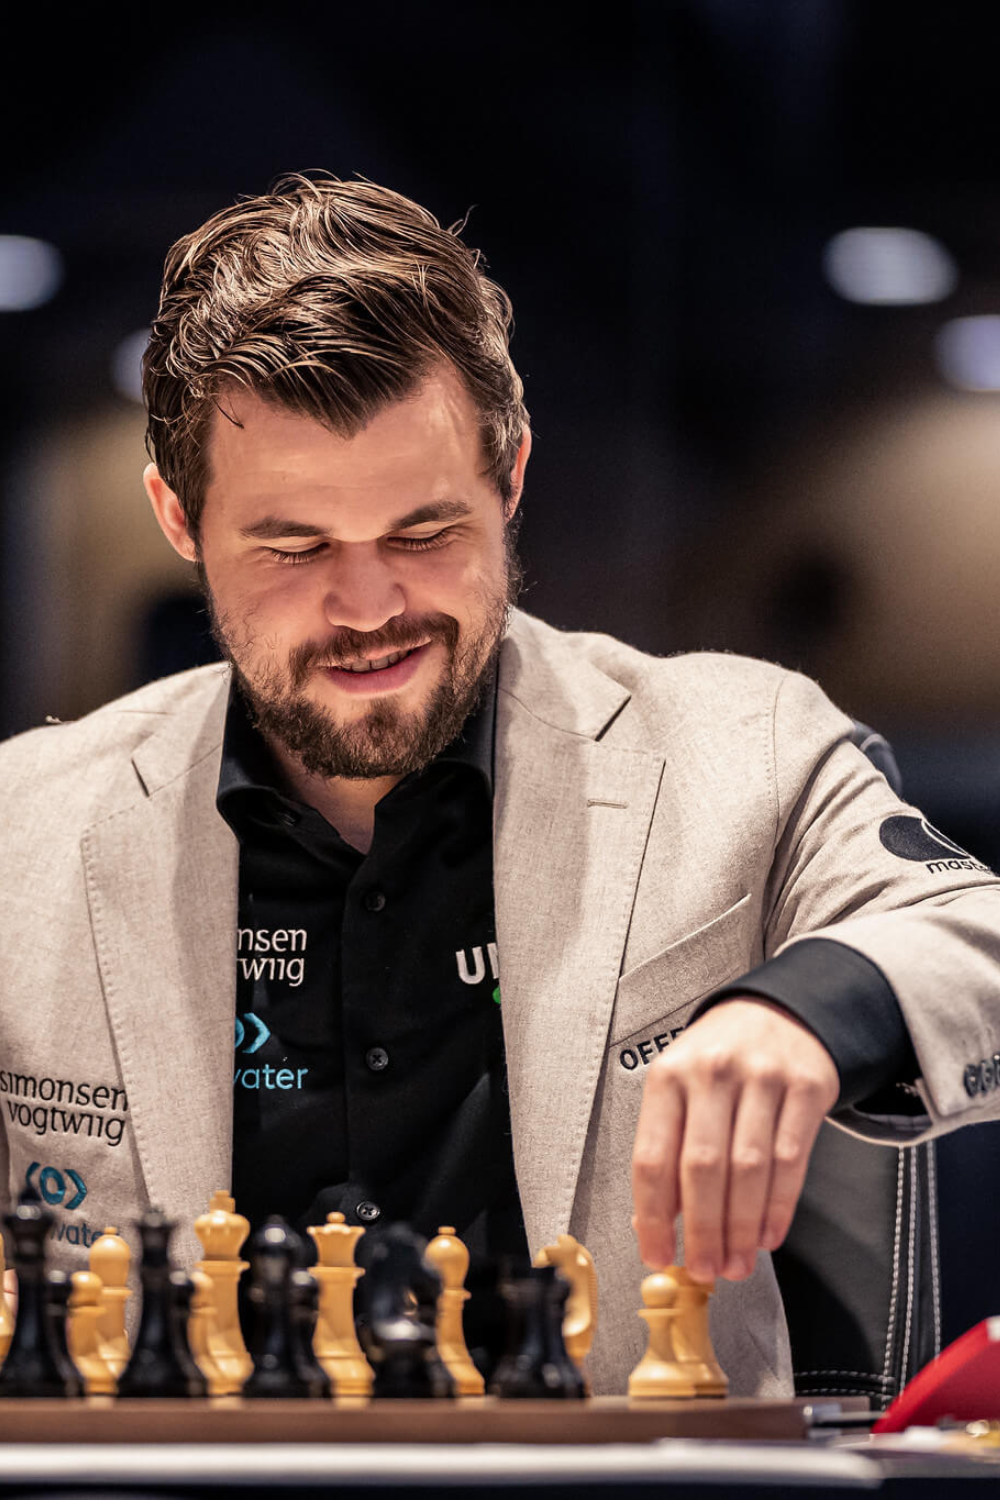 World Chess Champion, Magnus Carlsen